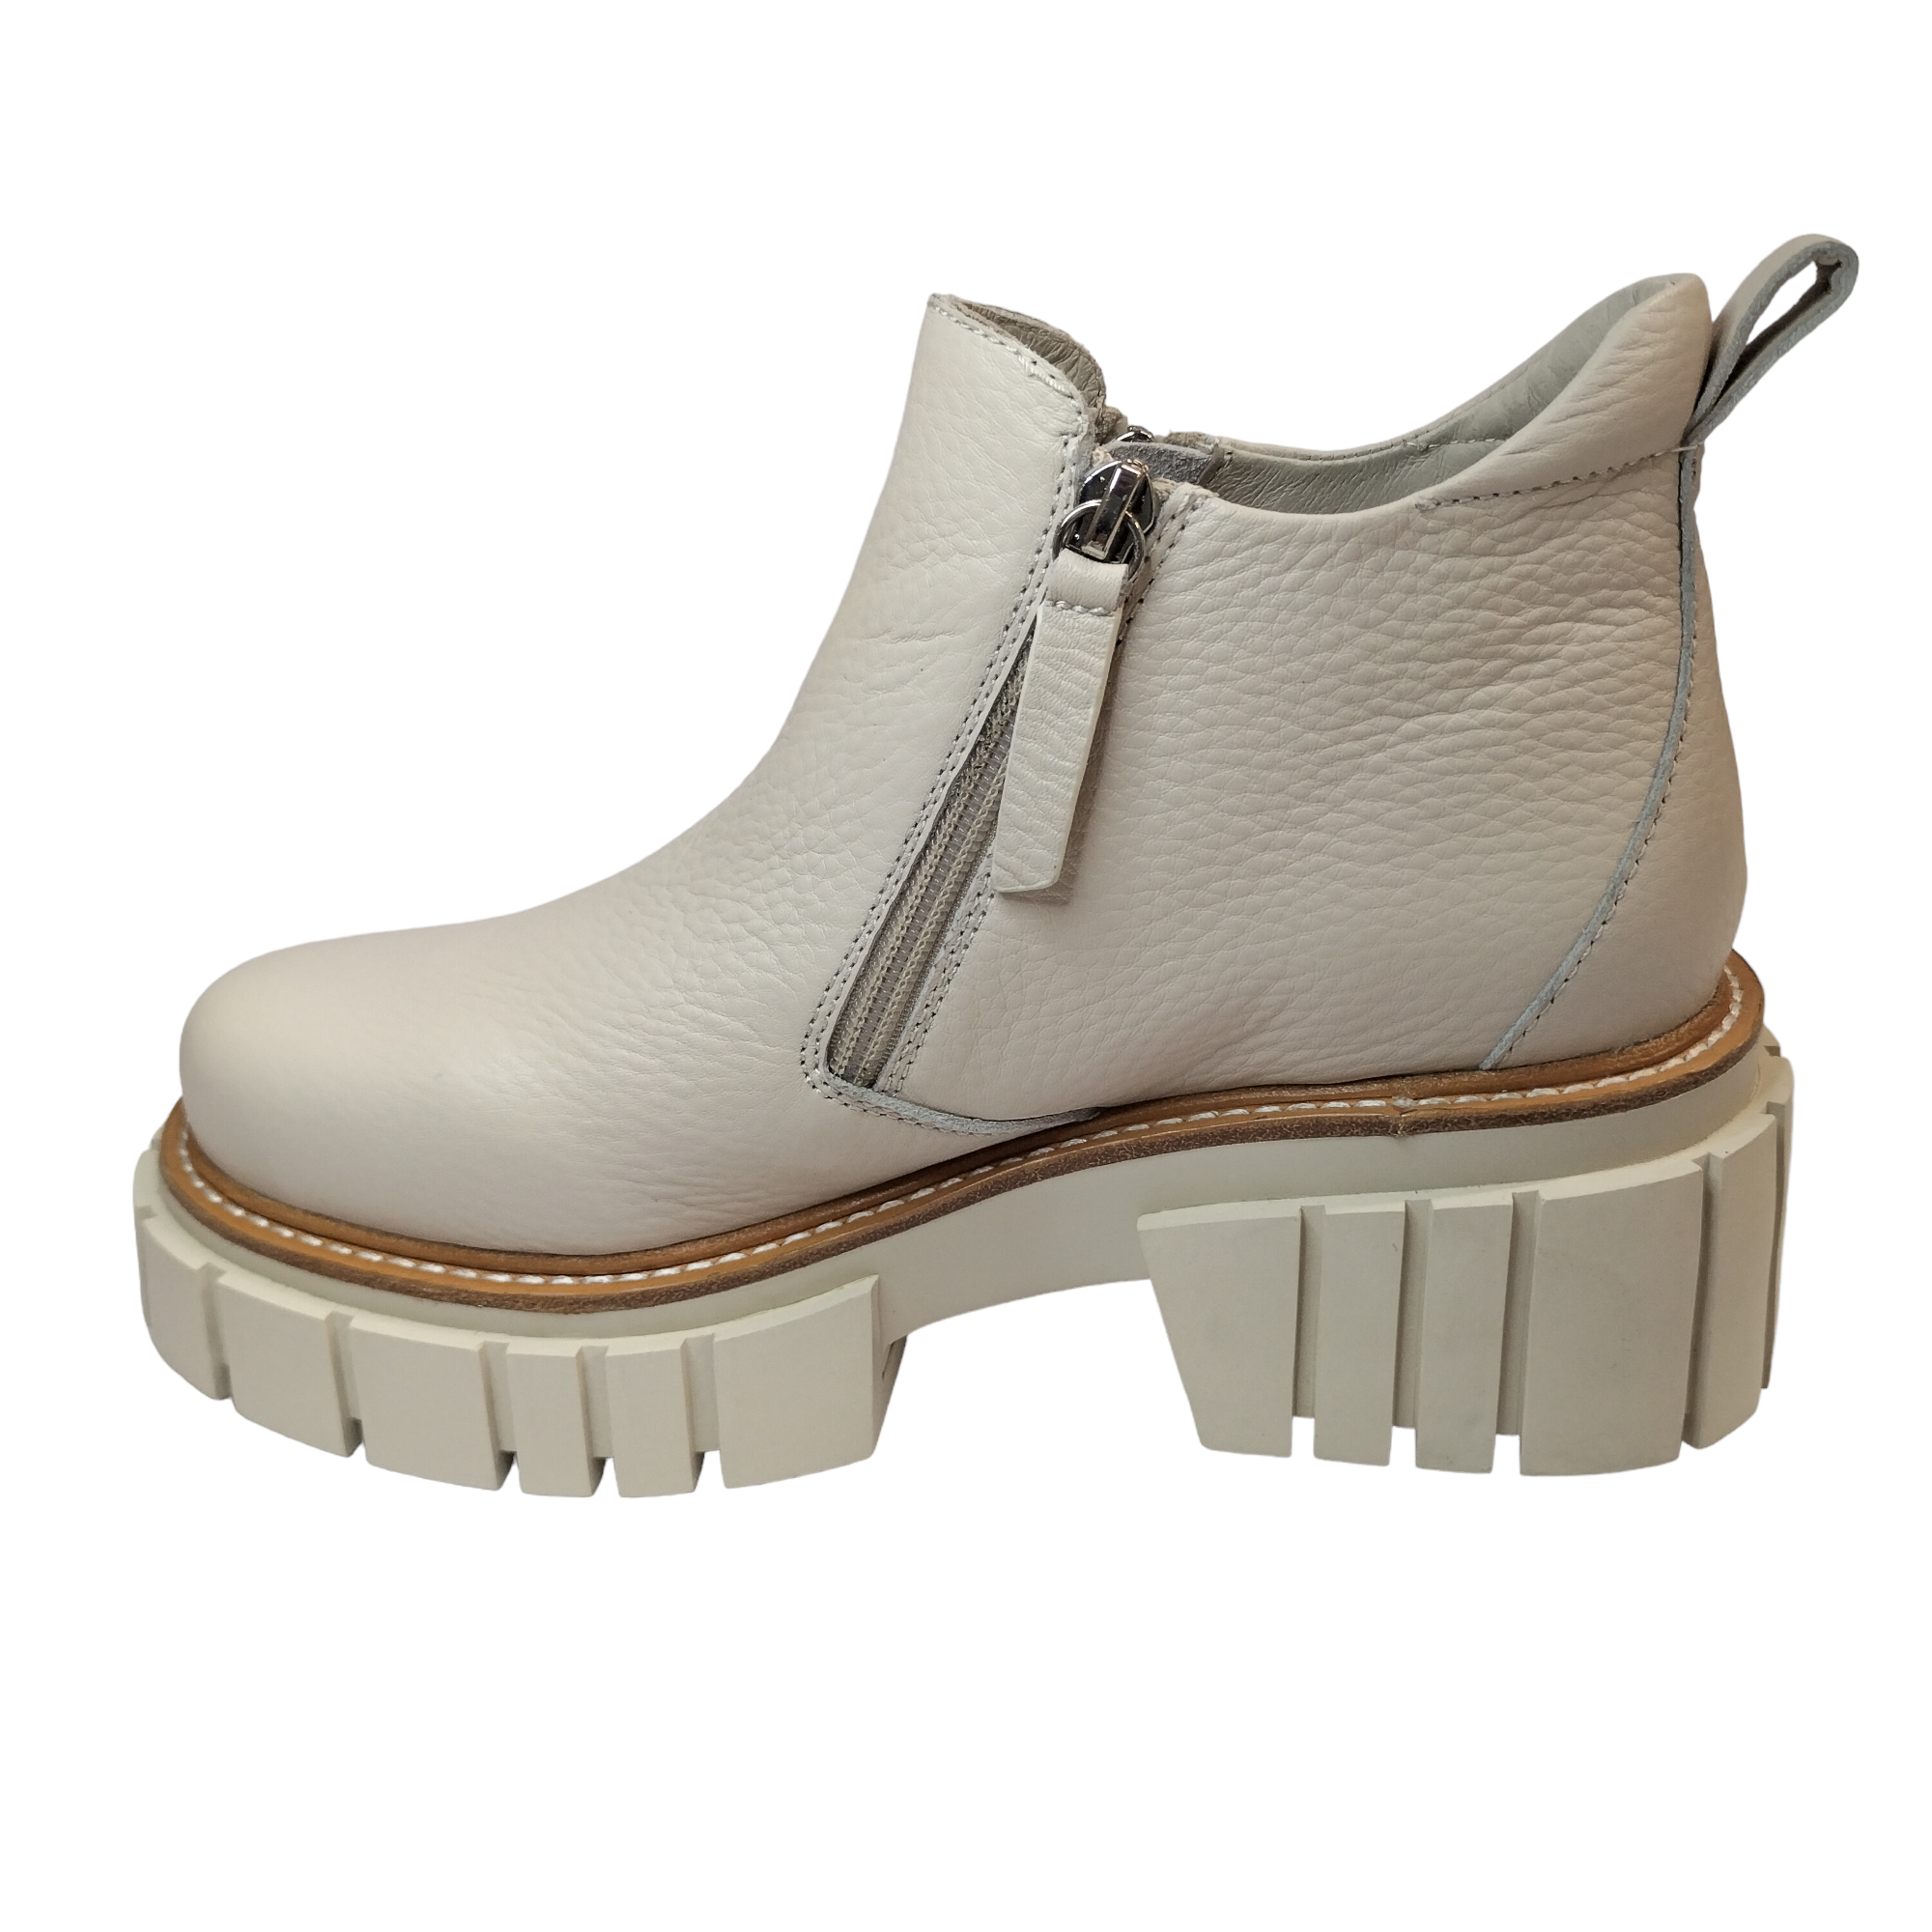 Blake - shoe&amp;me - Tamara - Boot - Boots, Wedges, Winter, Womens